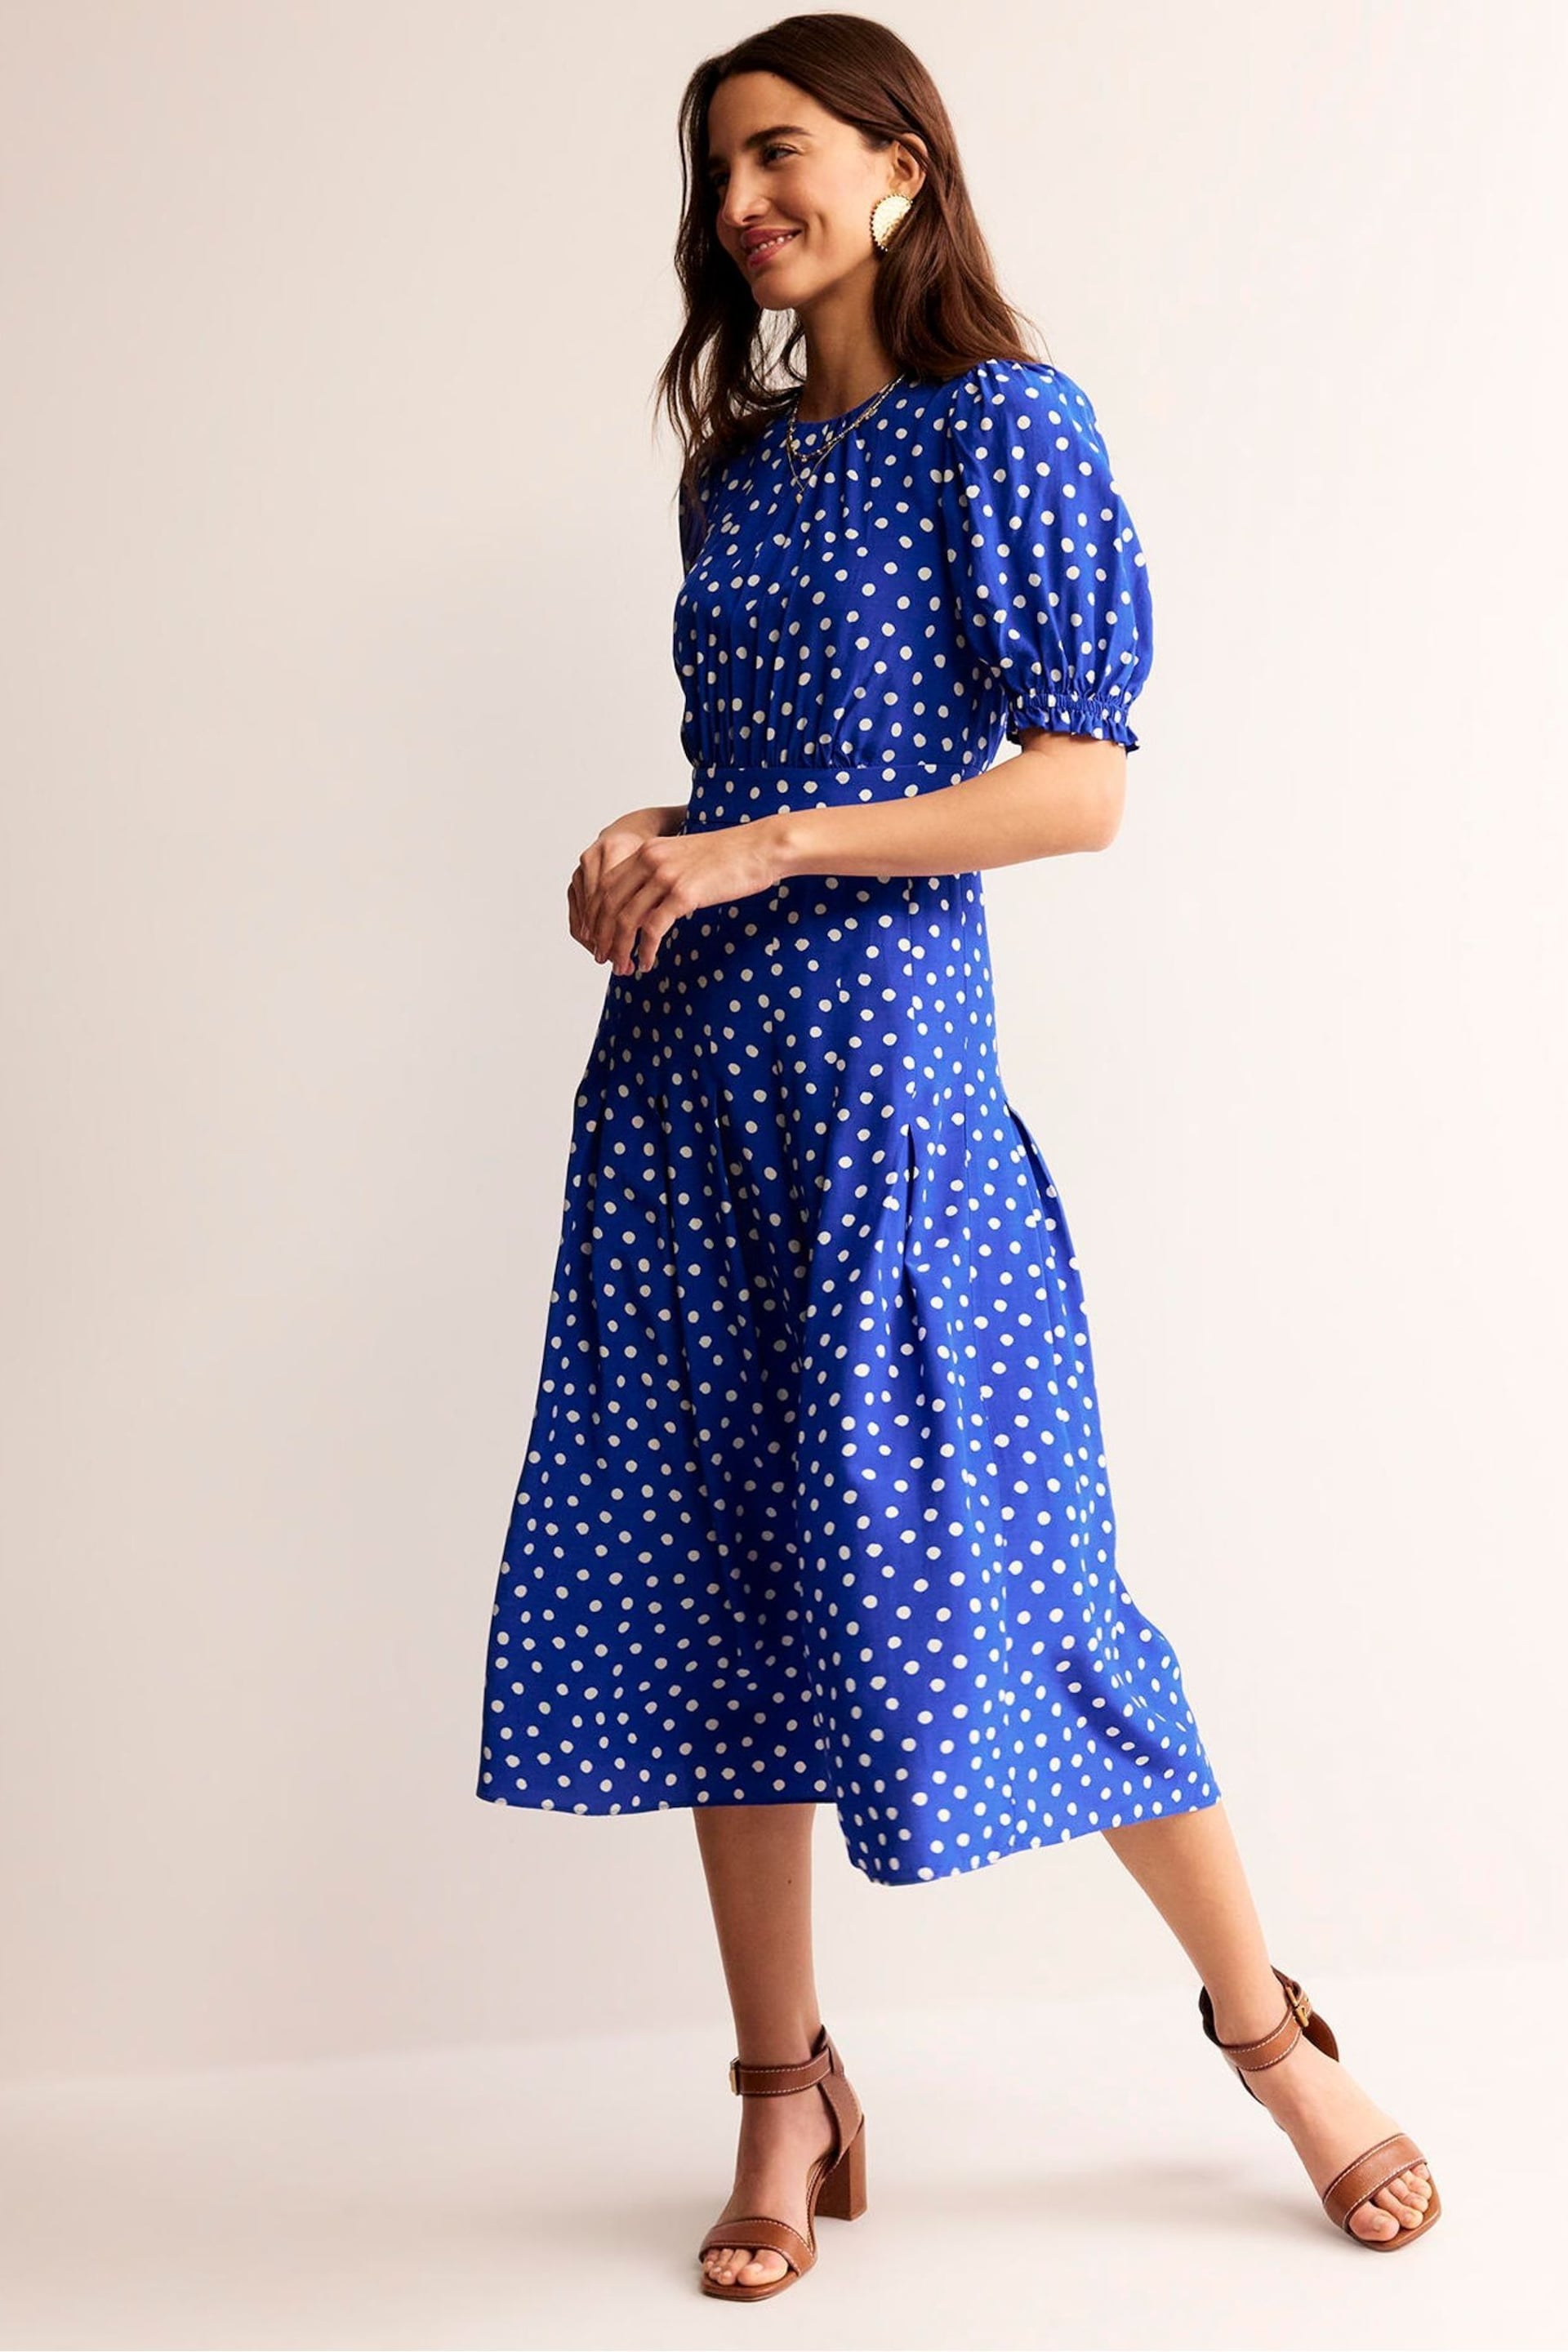 Boden Blue Liv Pleat Detail Midi Dress - Image 2 of 5